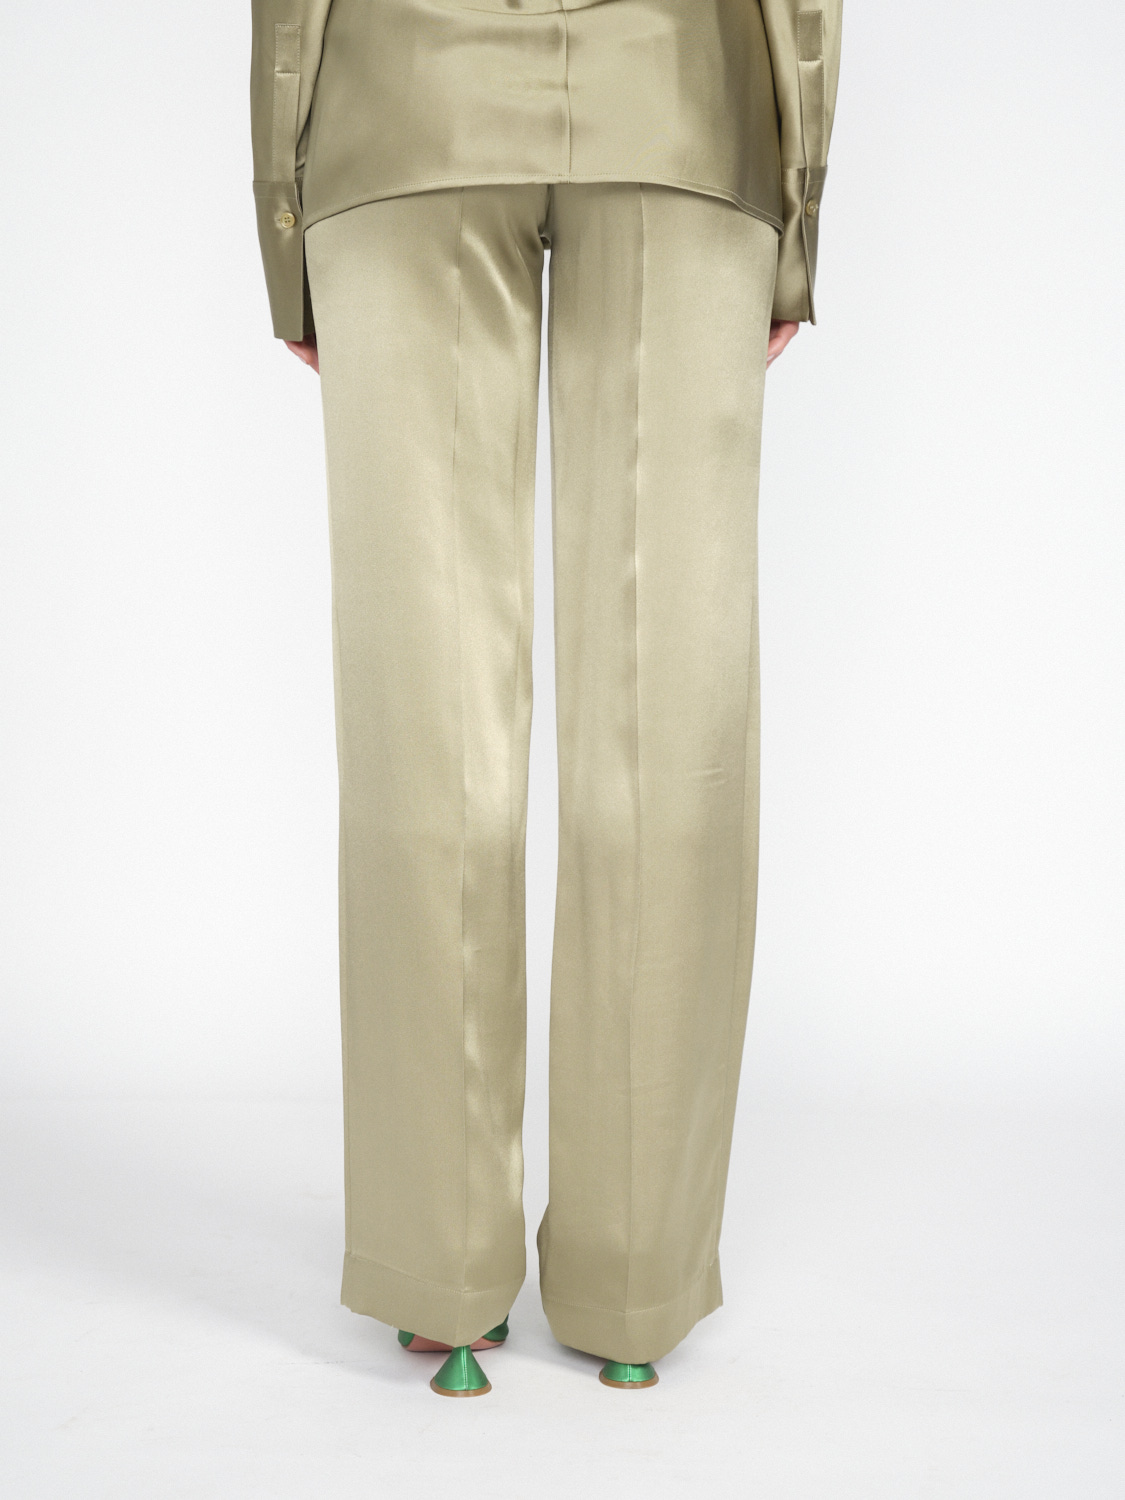 Joseph Silk Tova Trousers - Trousers in silk satin with creases  khaki 36